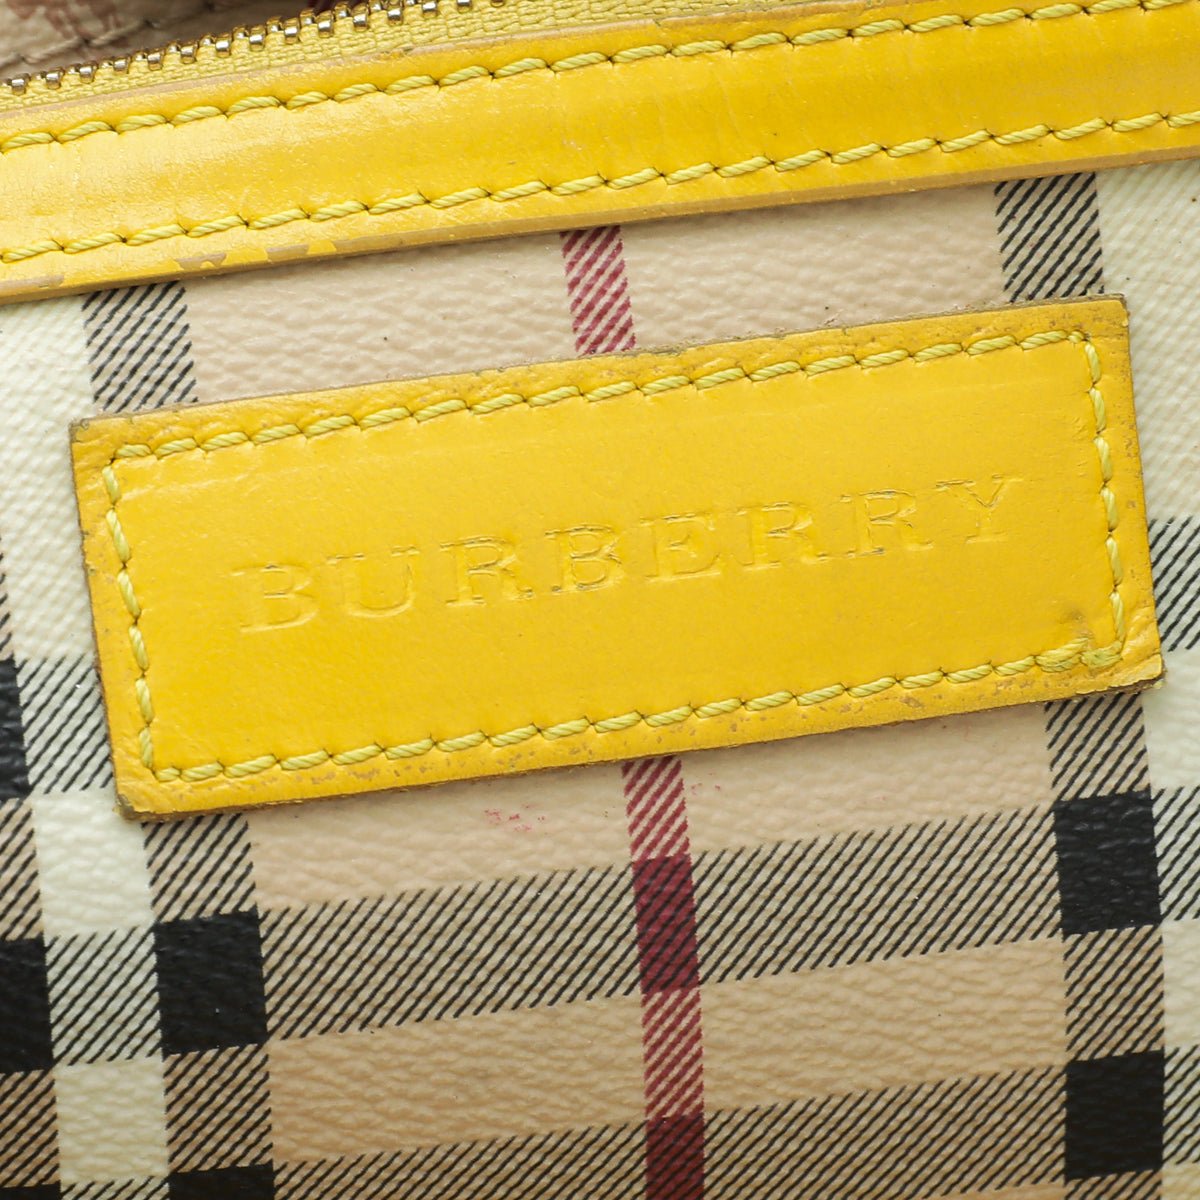 Burberry - Burberry Bicolor Haymarket Canterbury Tote Medium Bag | The Closet